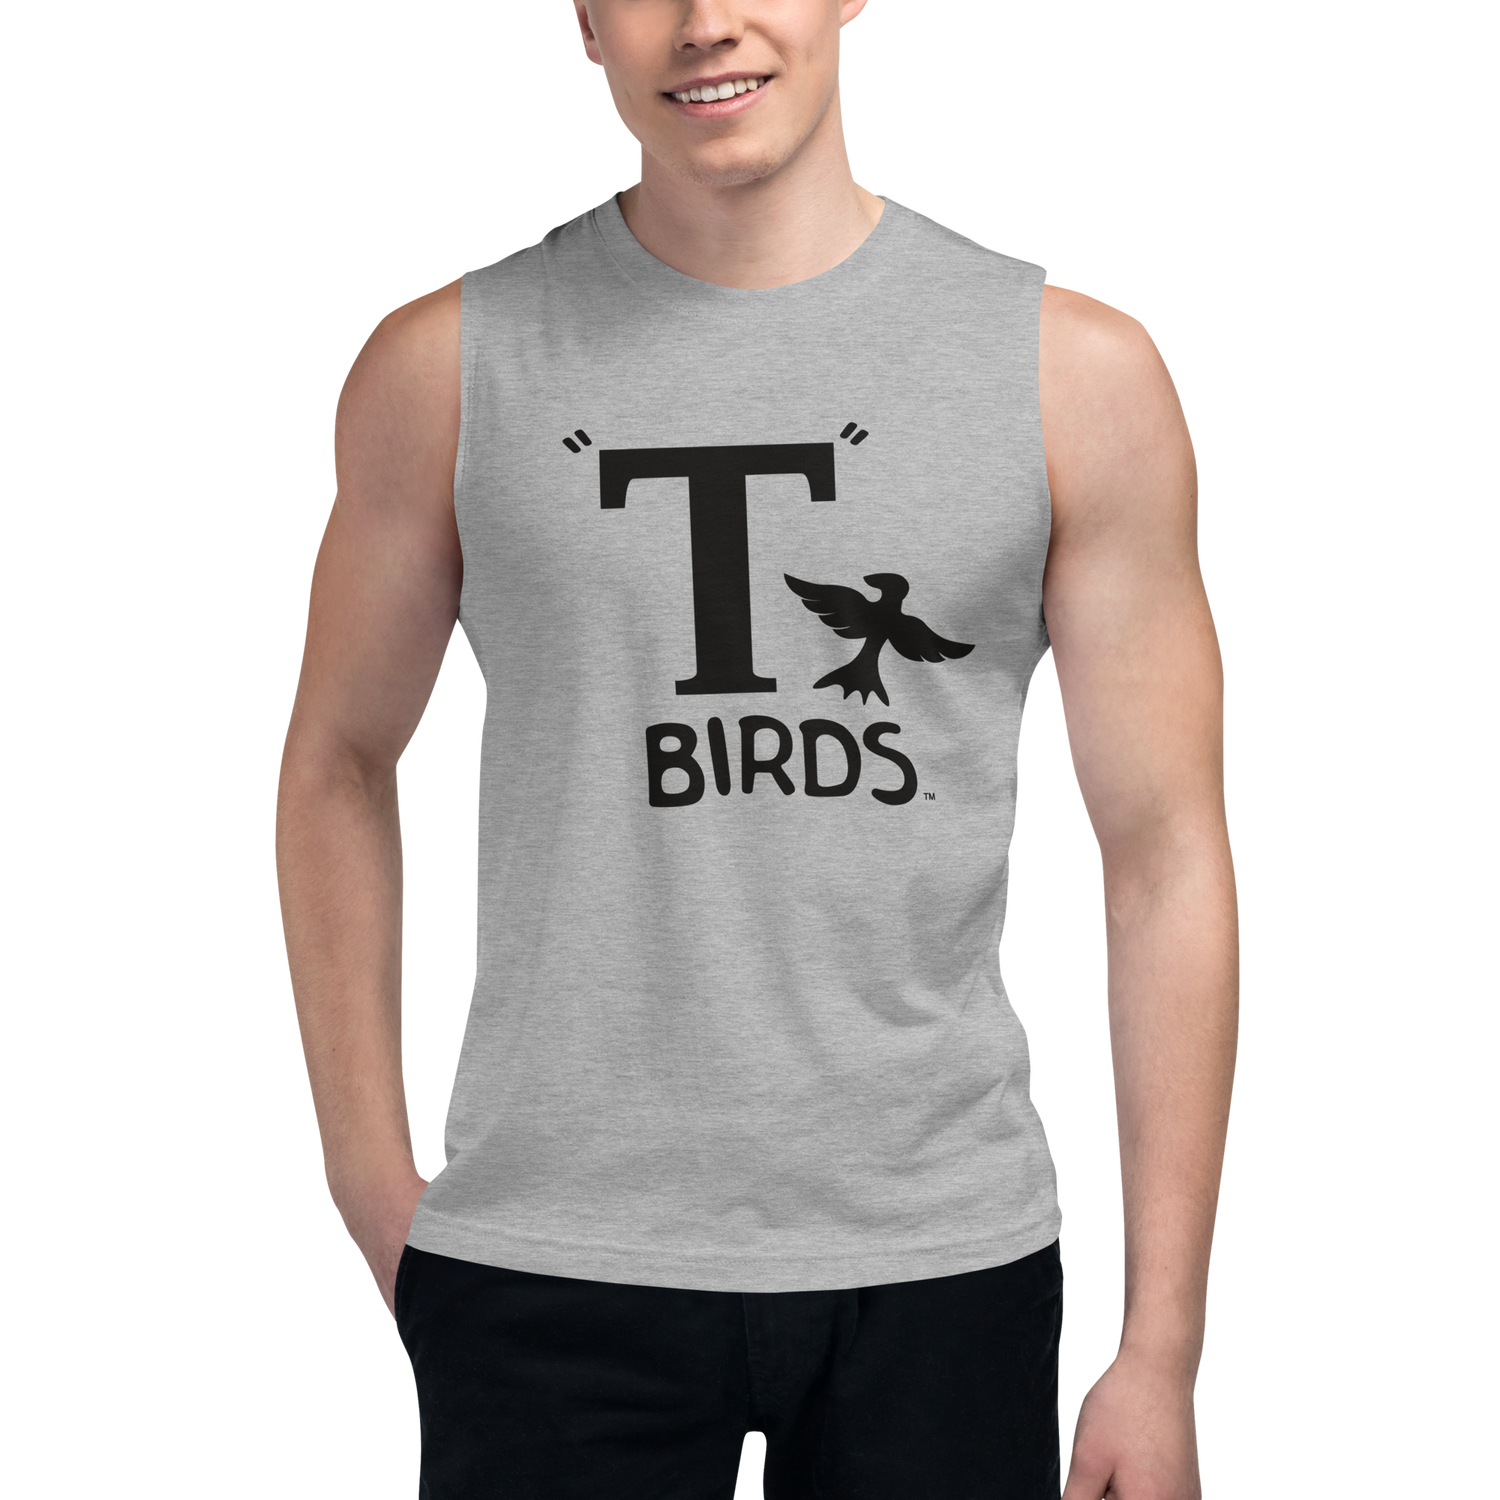 Grease T-Birds Unisex Muscle Tank Top